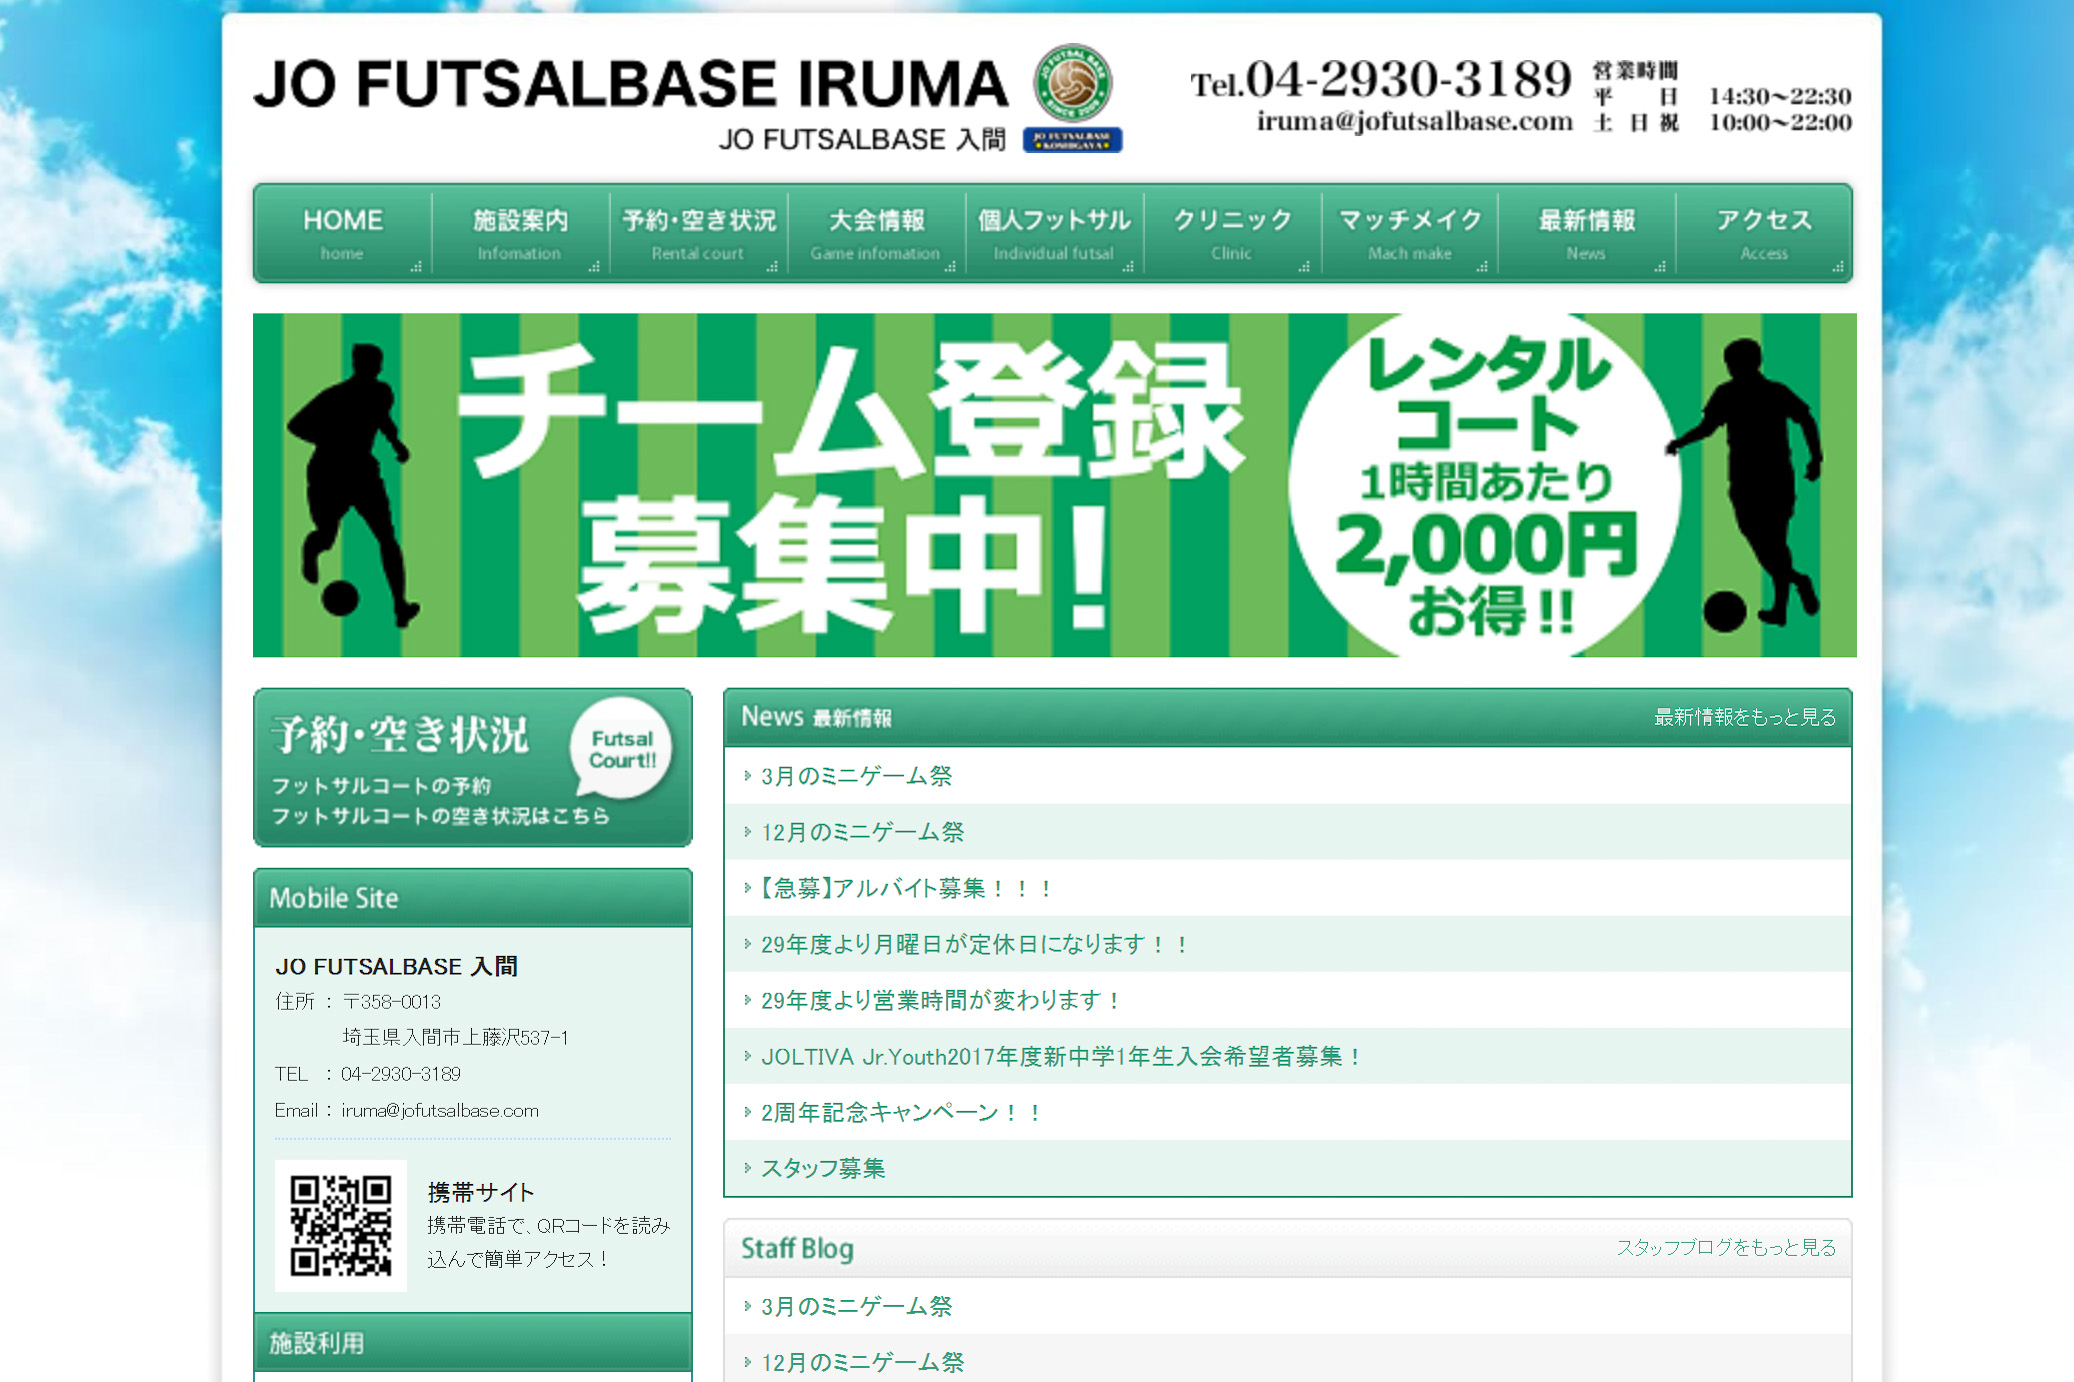 Jo Futsalbase 入間 フットサル全力応援メディア Sal